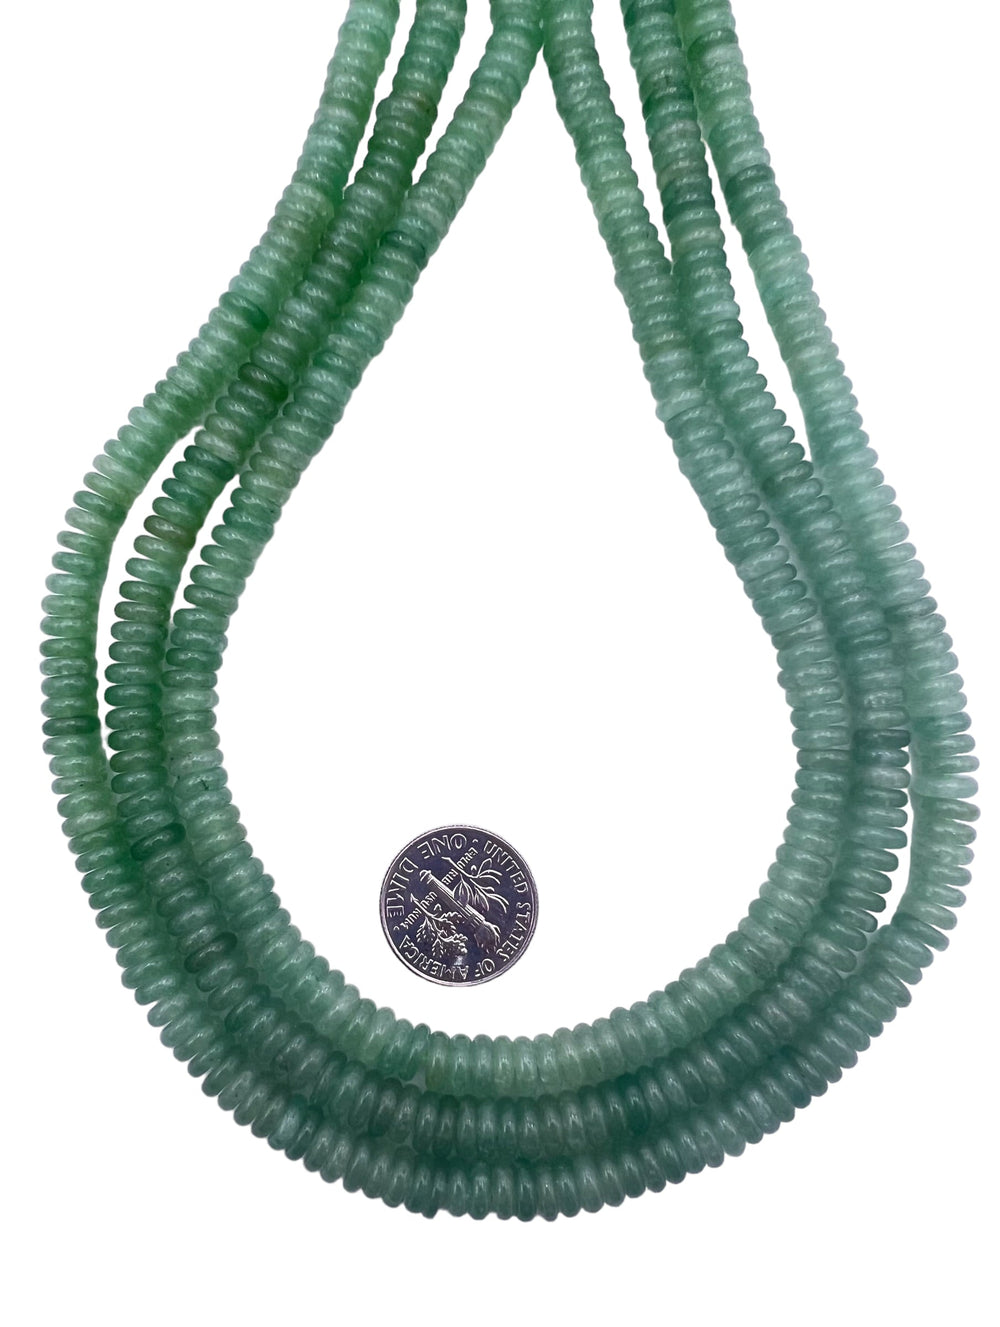 Green Aventurine 2x6mm Rondelle/Wheel Beads 16 inch Strand -